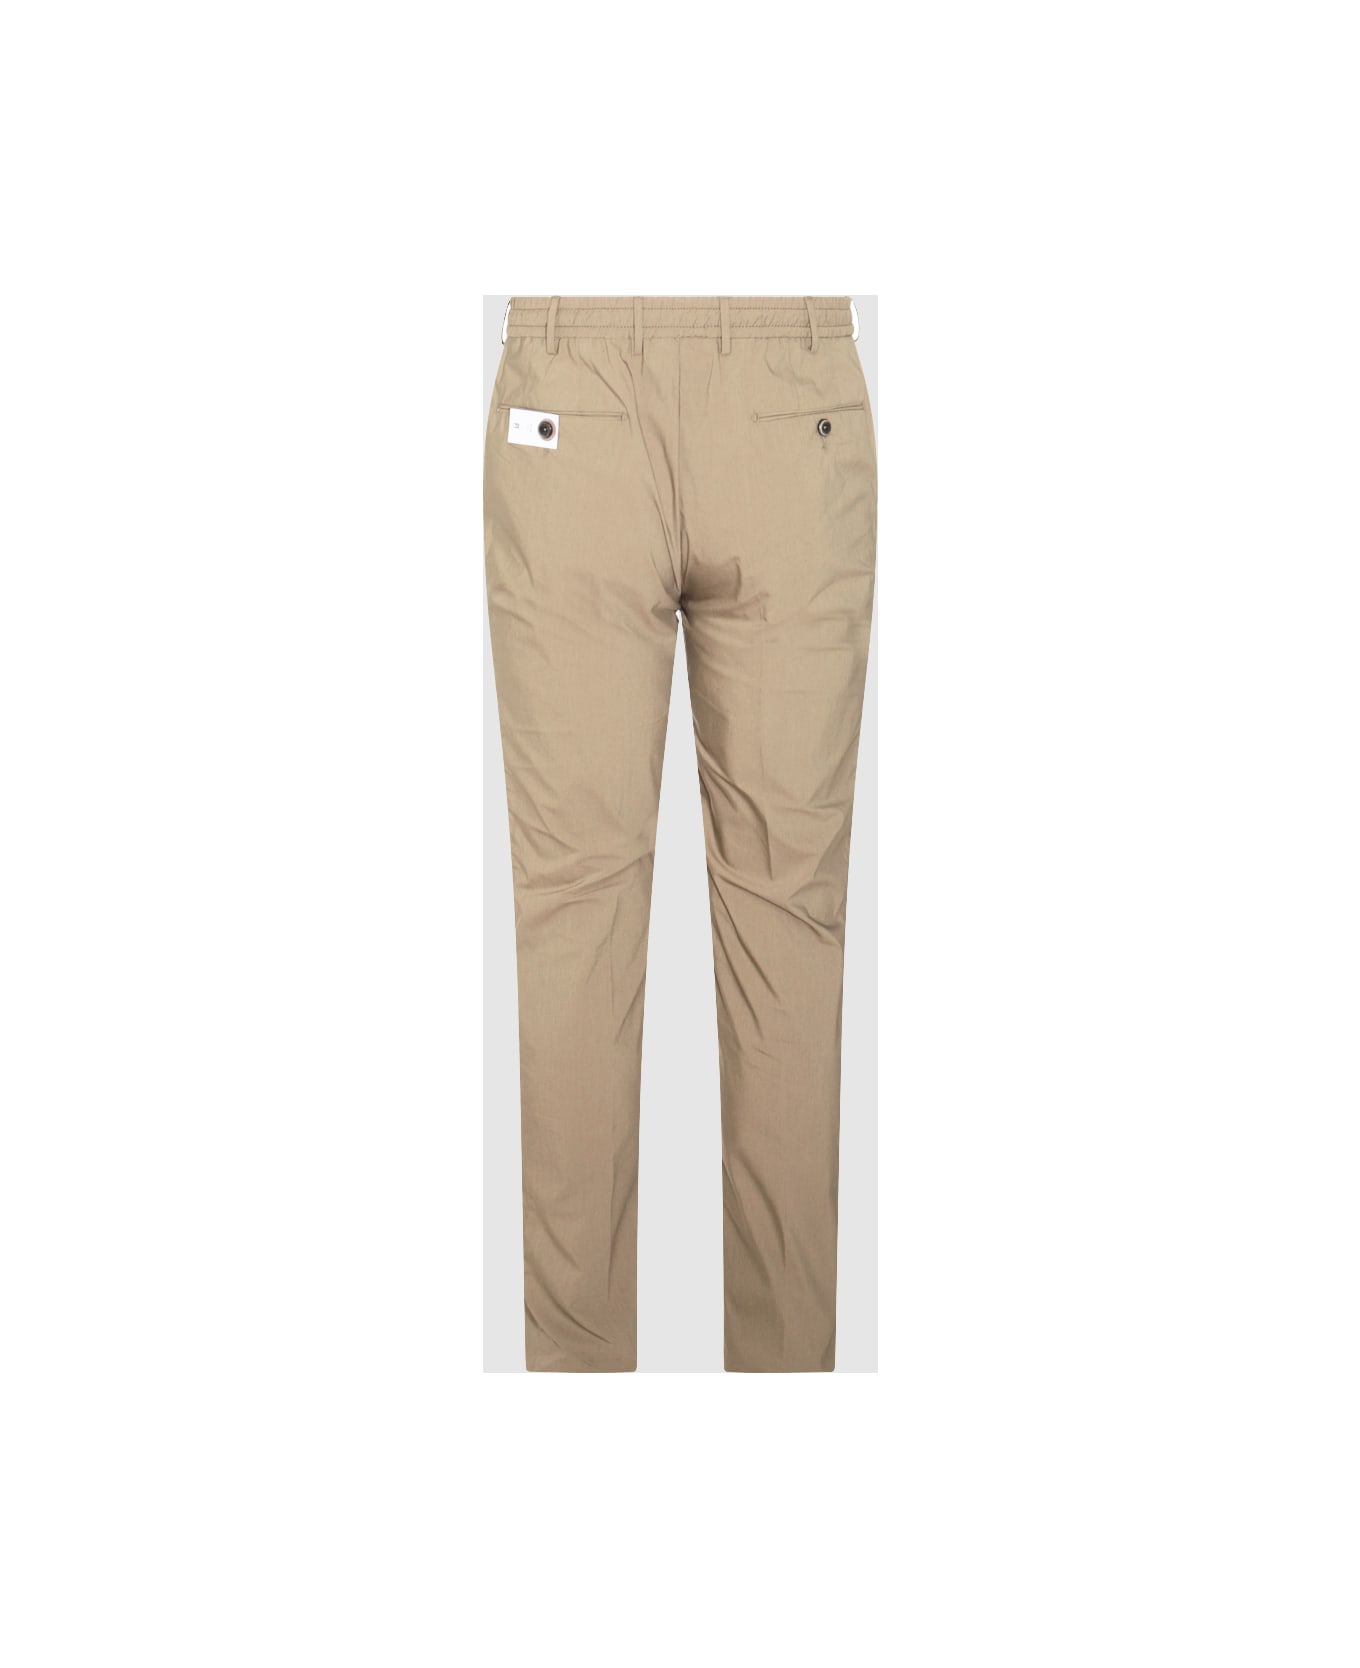 PT01 Beige Cotton Pants - BEIGE FREDDO